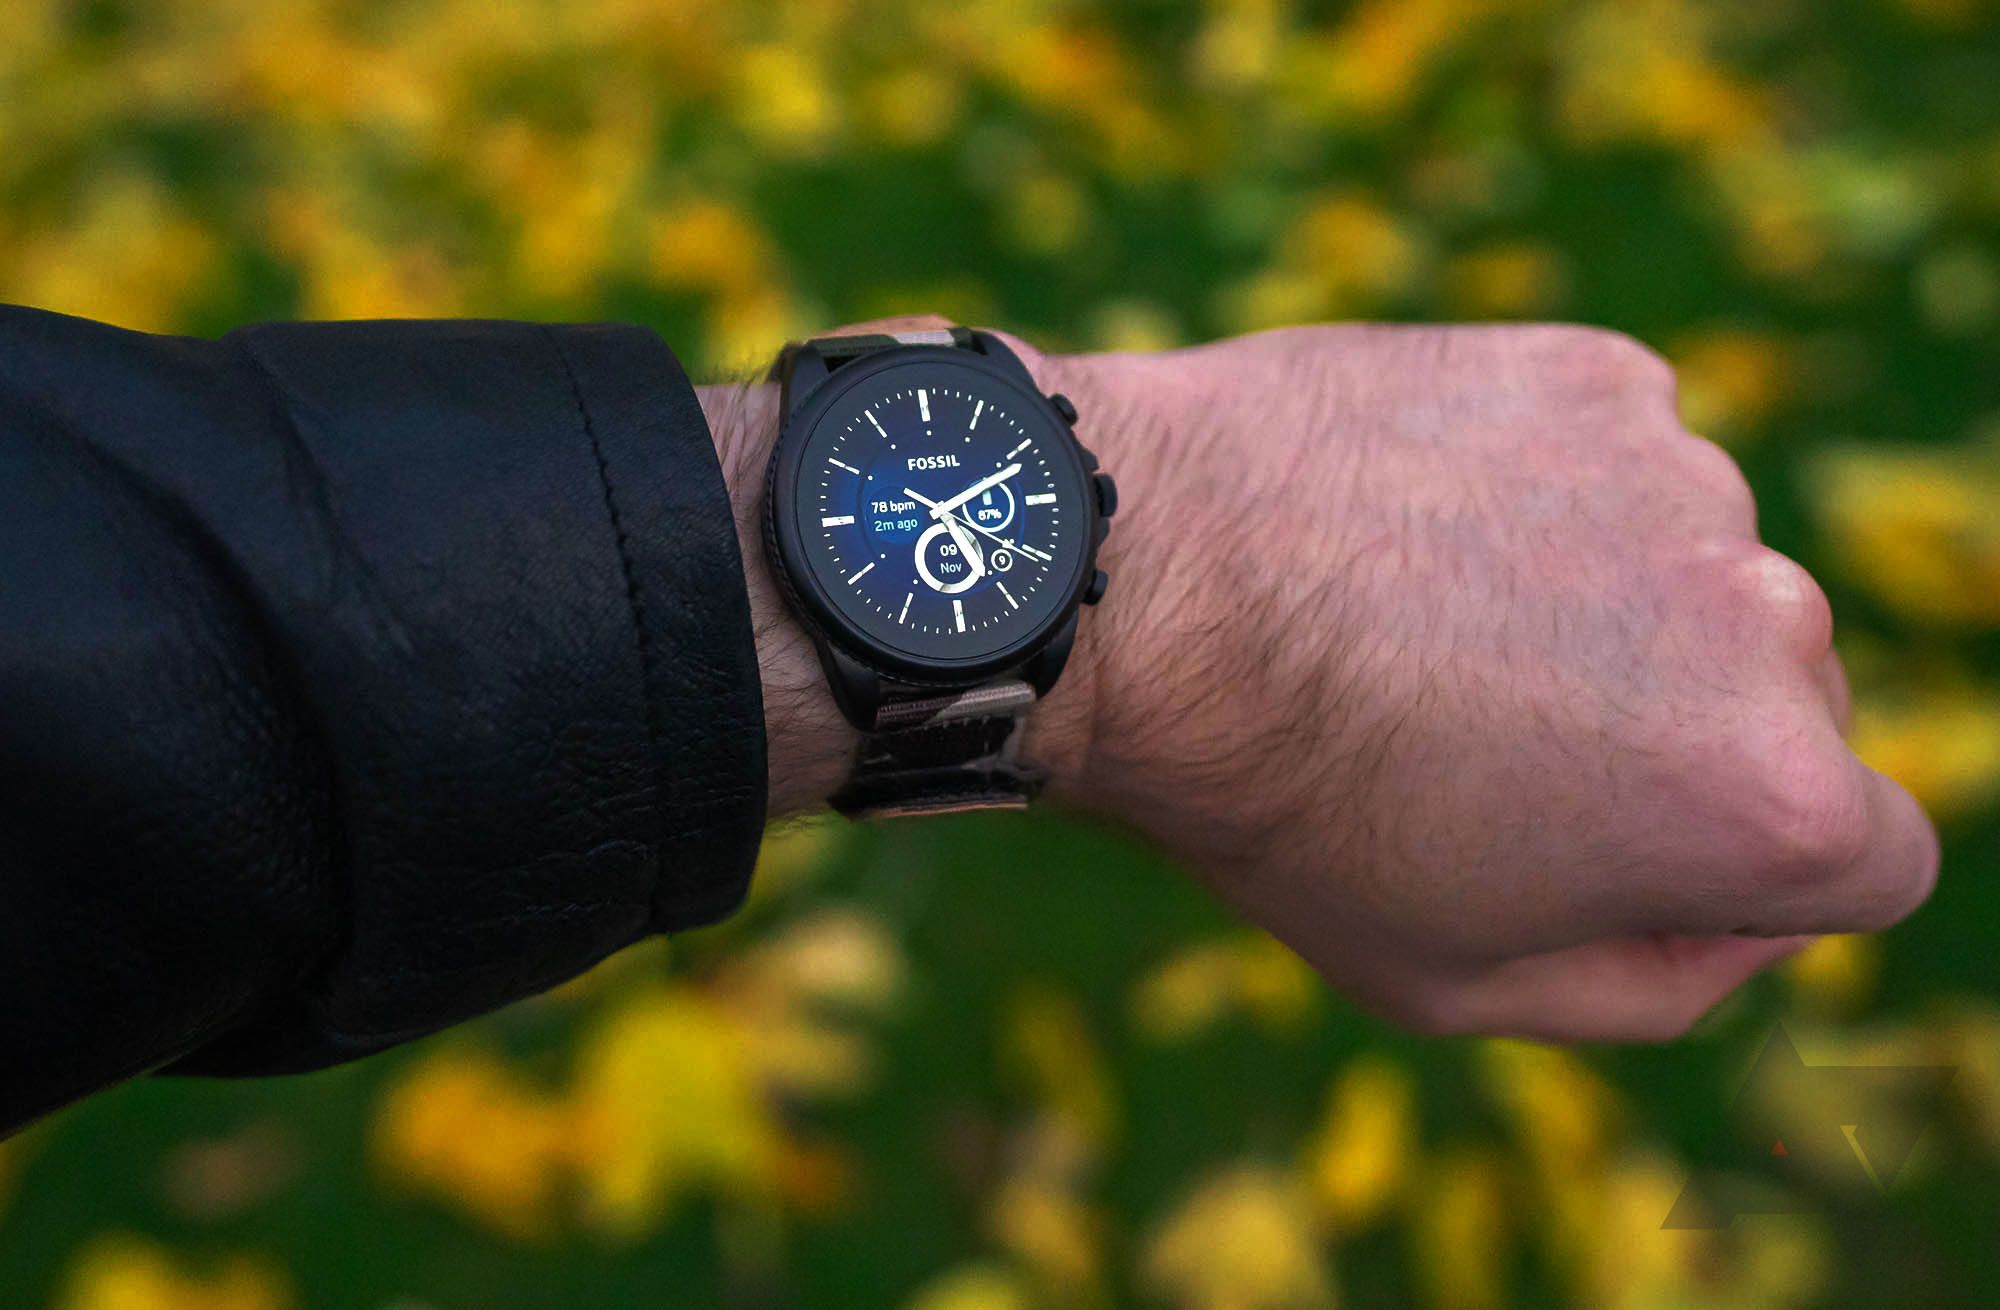 A smartwatch on a wrist.